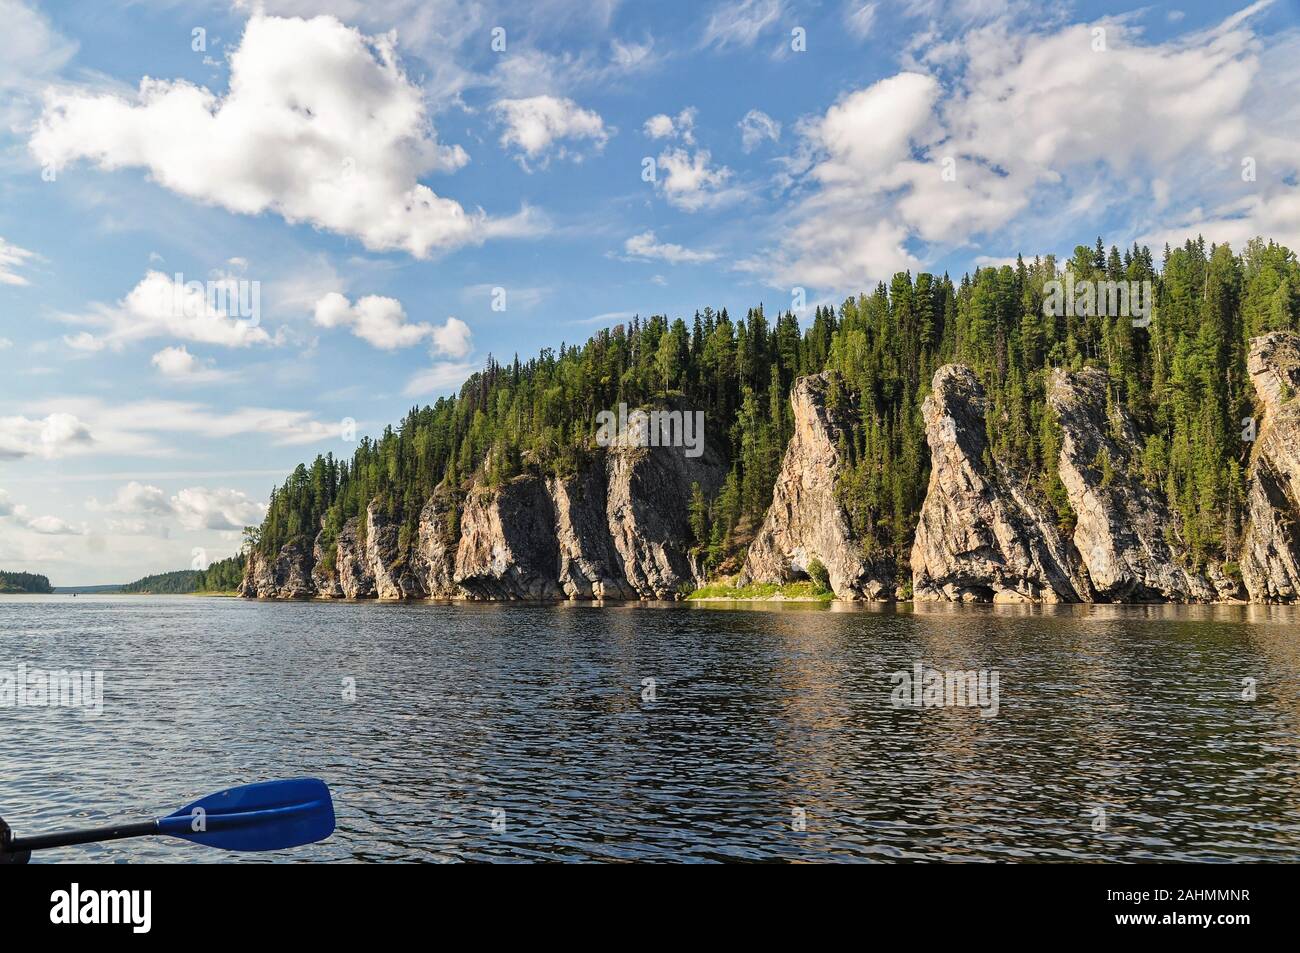 'Komi Virgin Forests' - a UNESCO World Heritage Site. Schugor River in the Yugyd VA National Park, Komi Republic, Northern Urals. Russia. Stock Photo